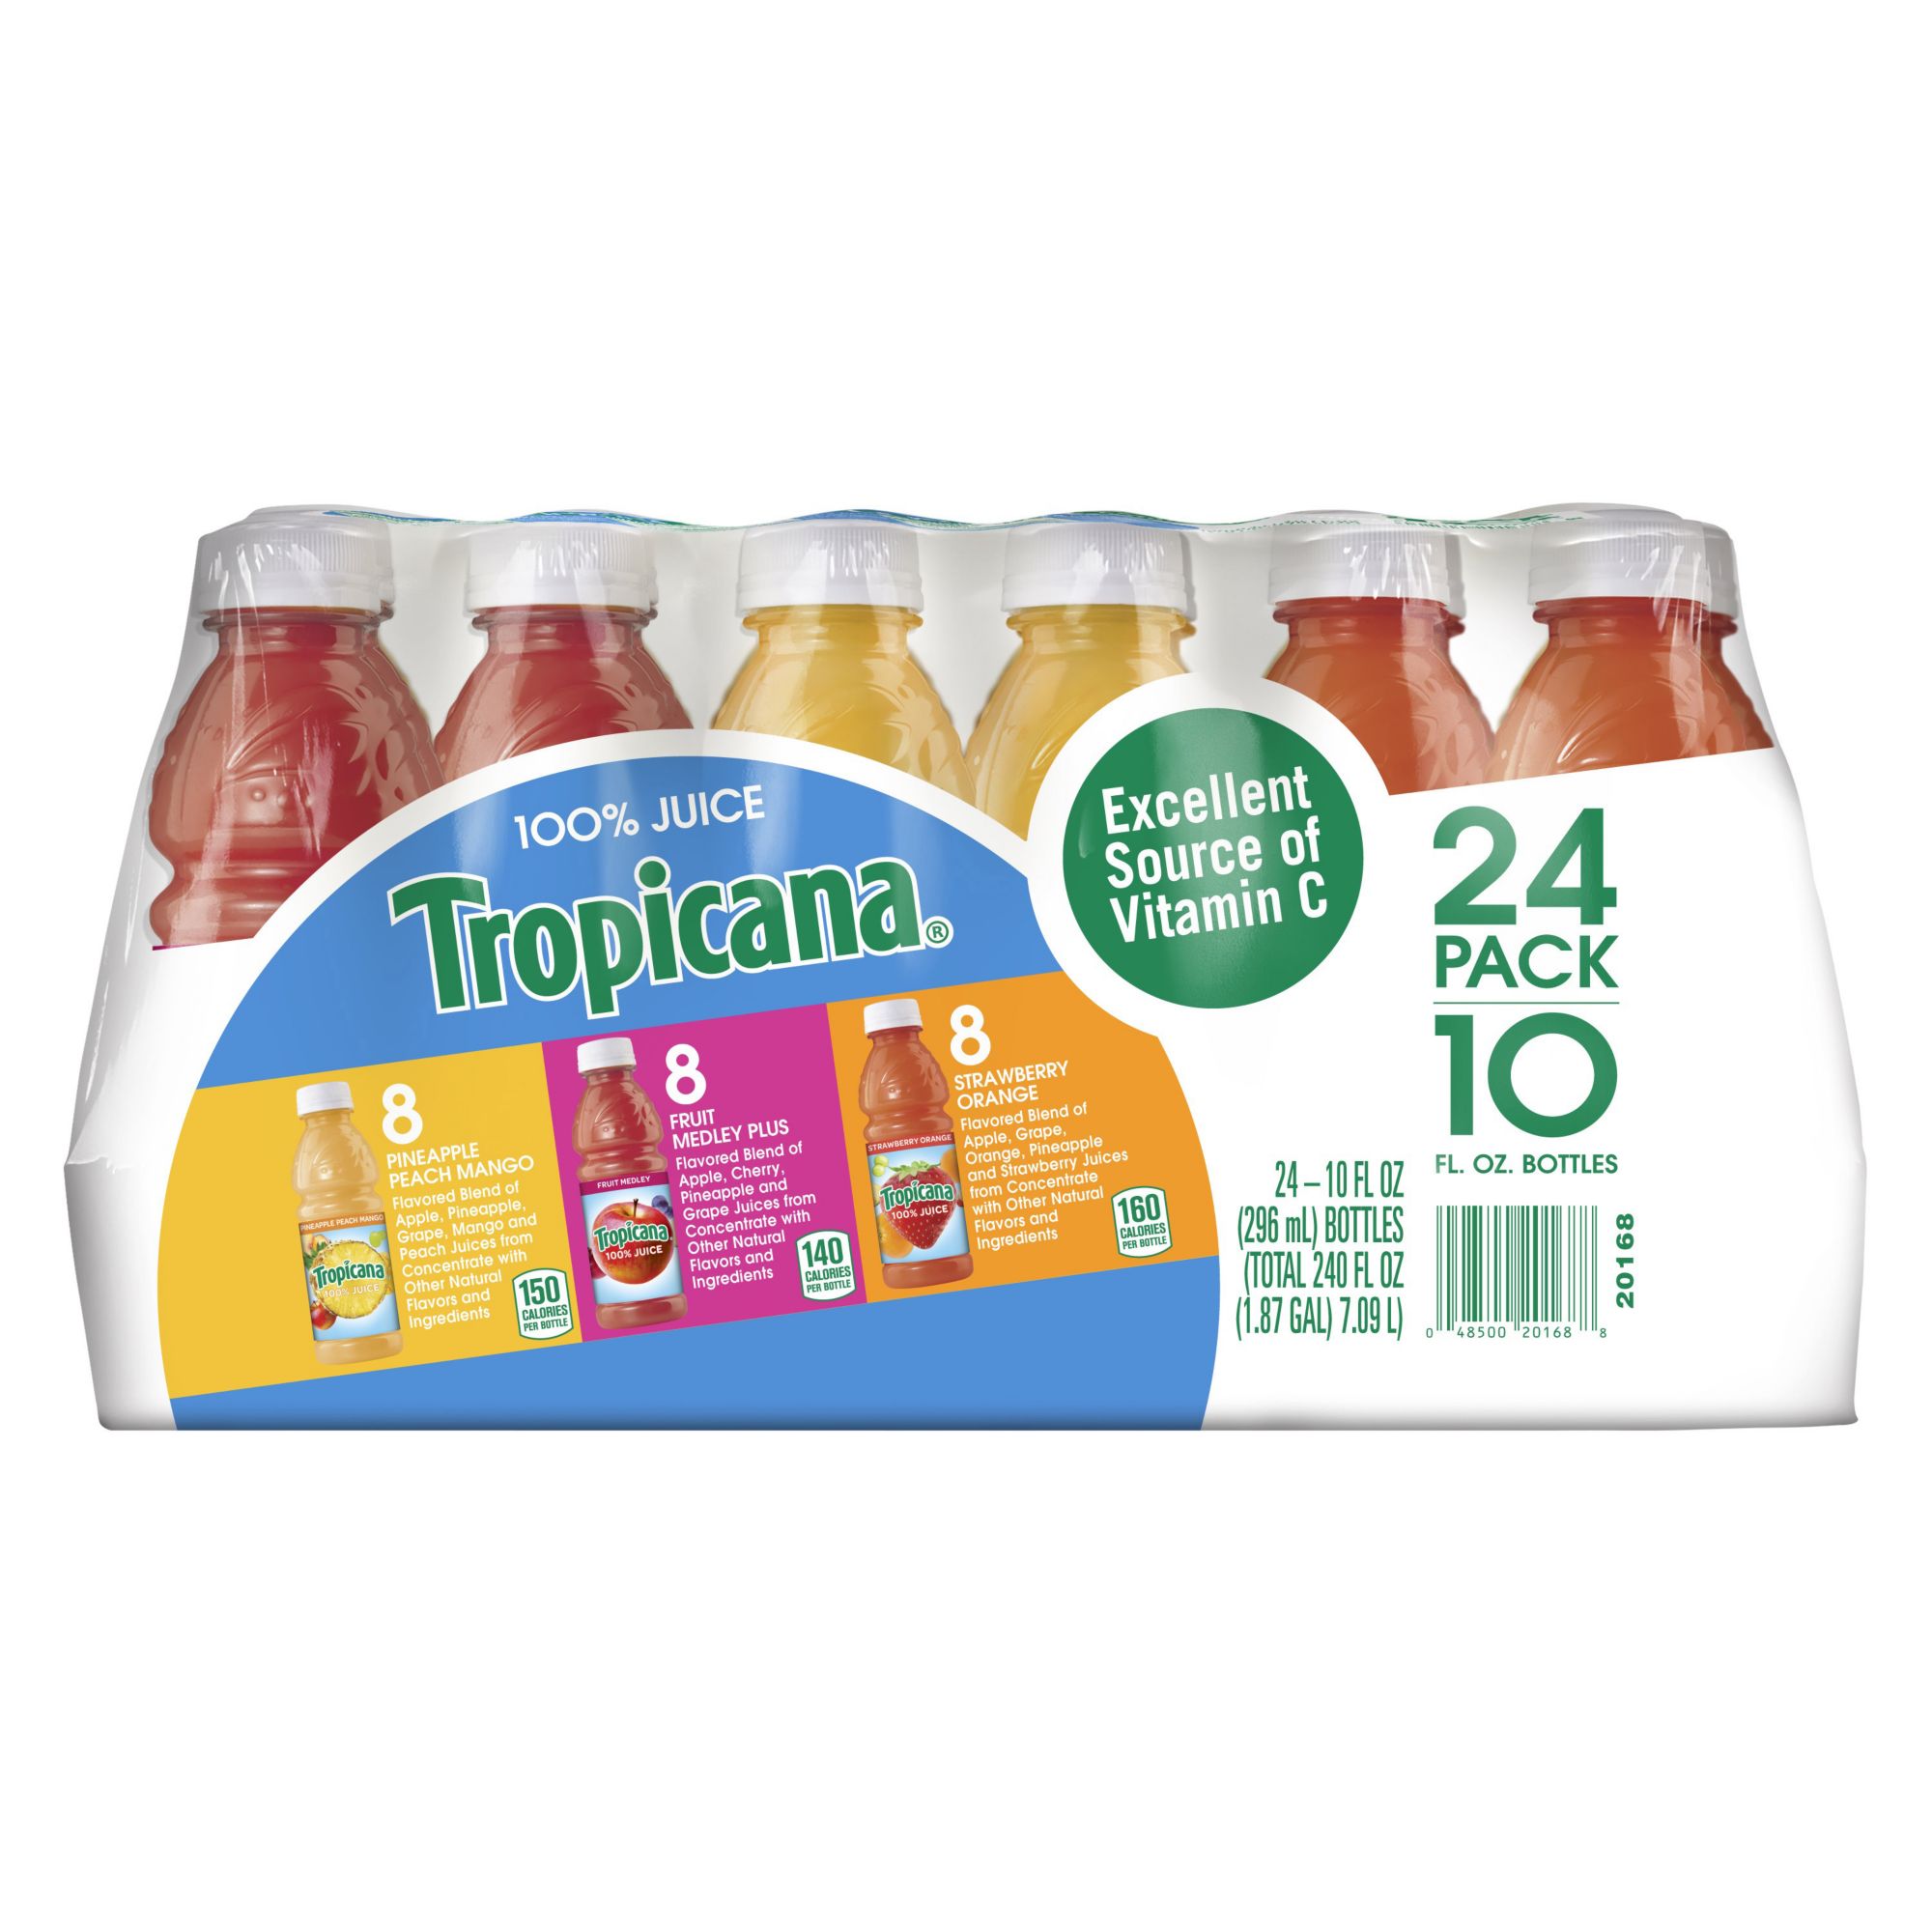 Tropicana Mixed Juice Variety Pack, 24 pk./10 oz.